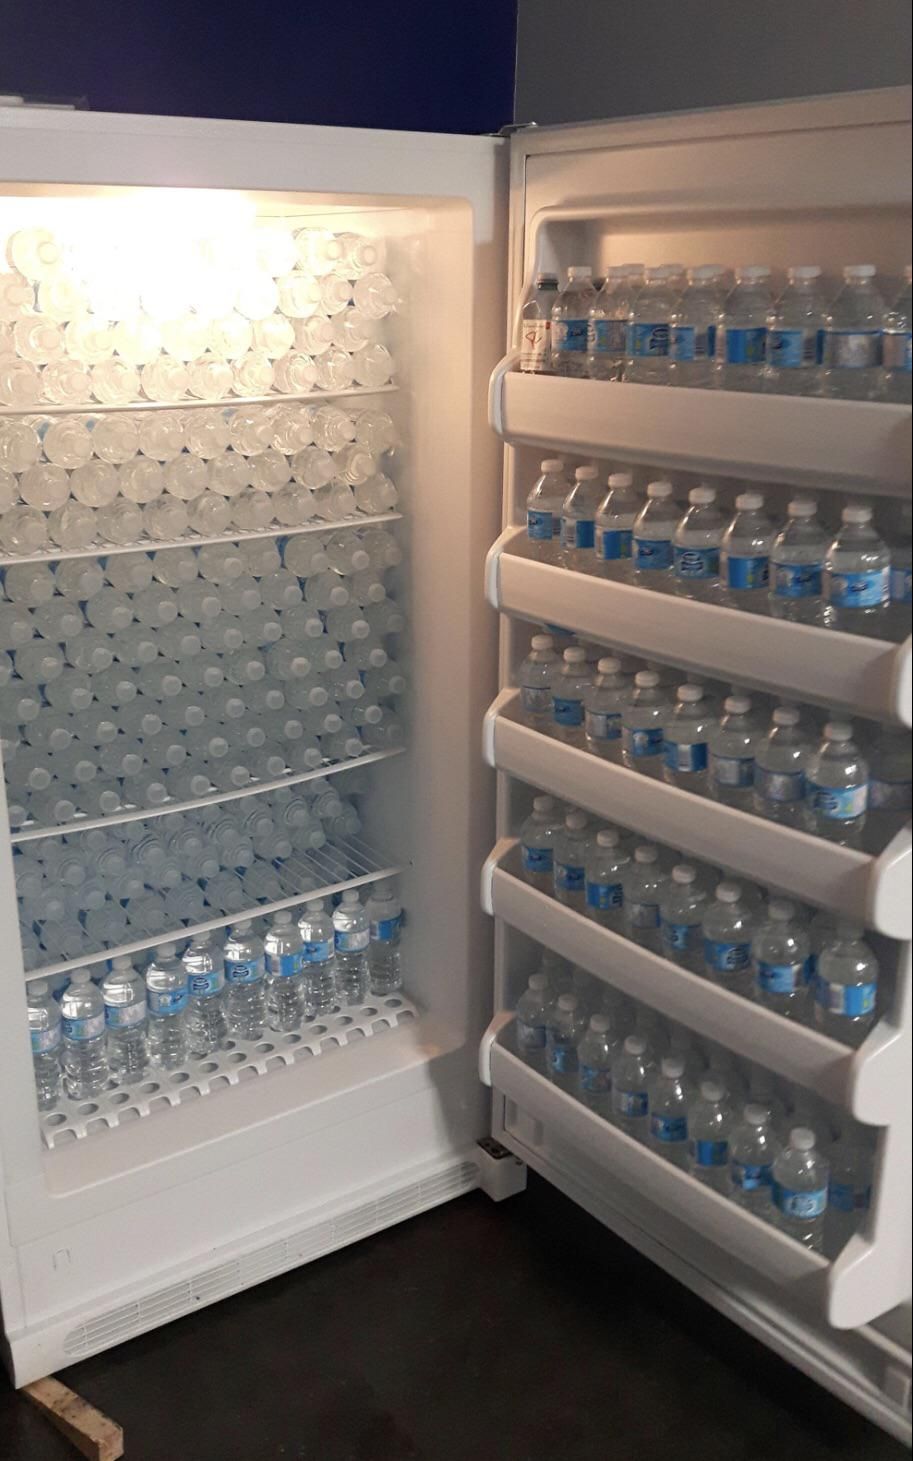 How Ronaldo’s fridge looks like